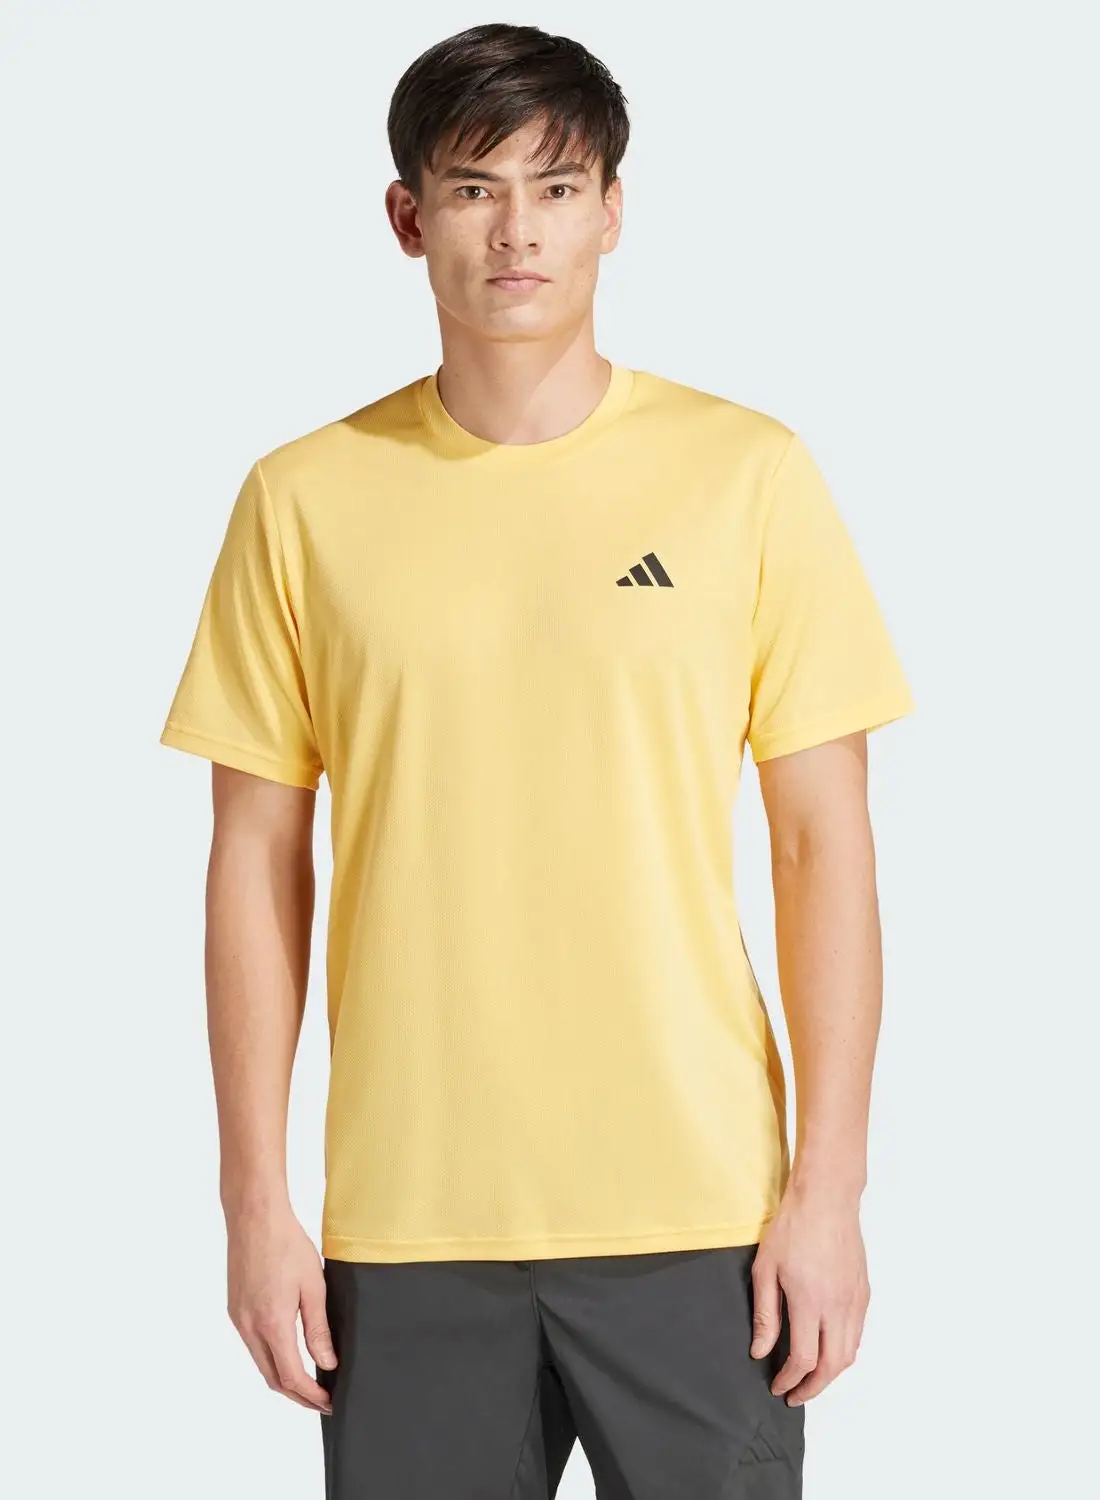 Adidas Train Essential Base T-Shirt